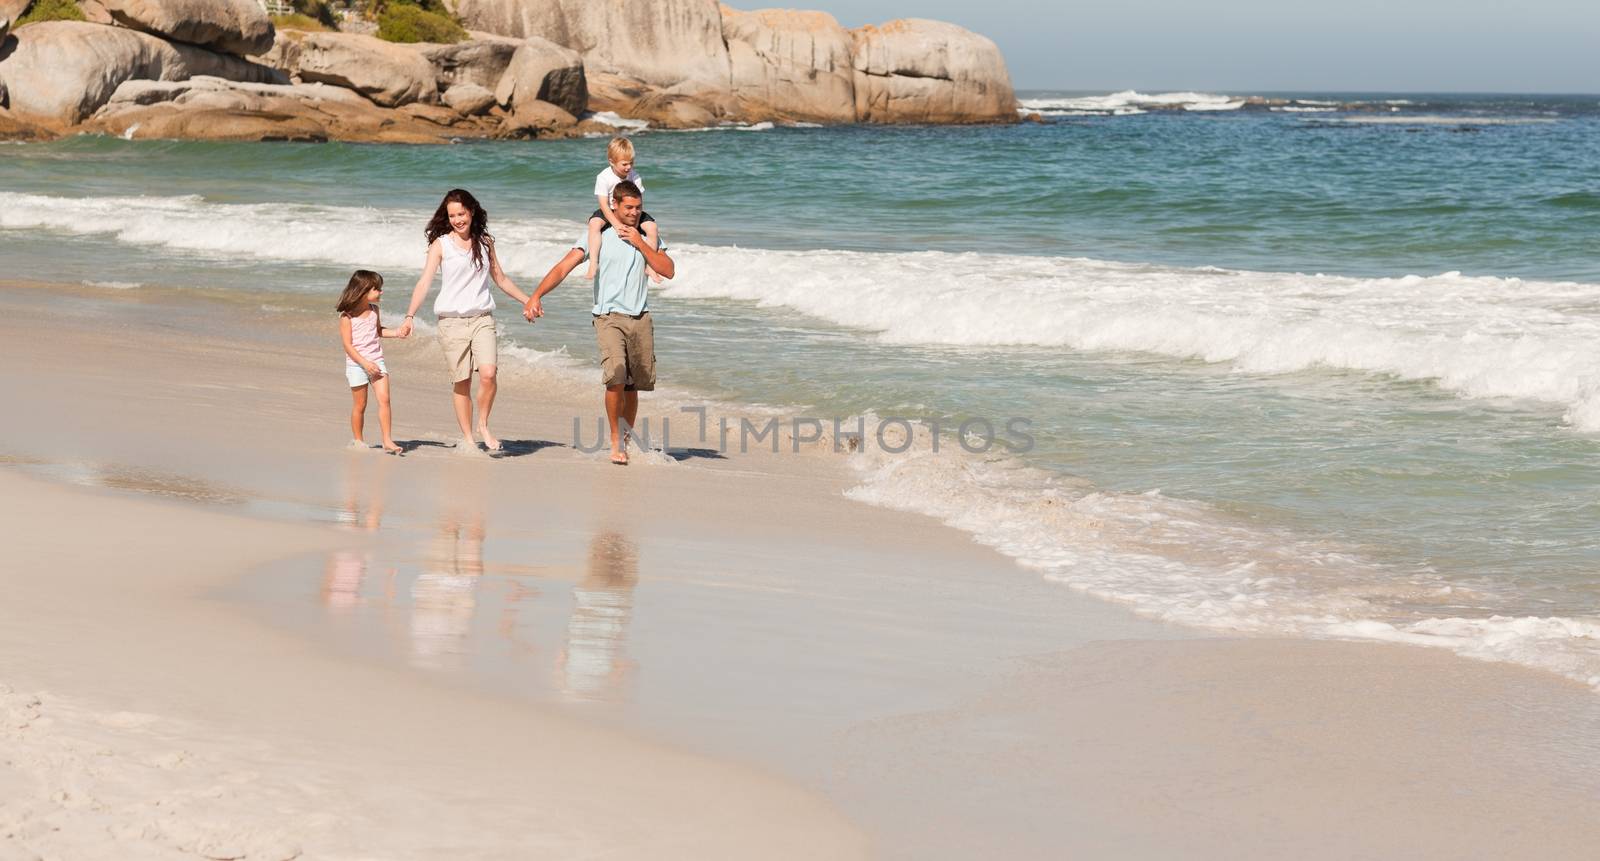 Joyful family at the beach by Wavebreakmedia